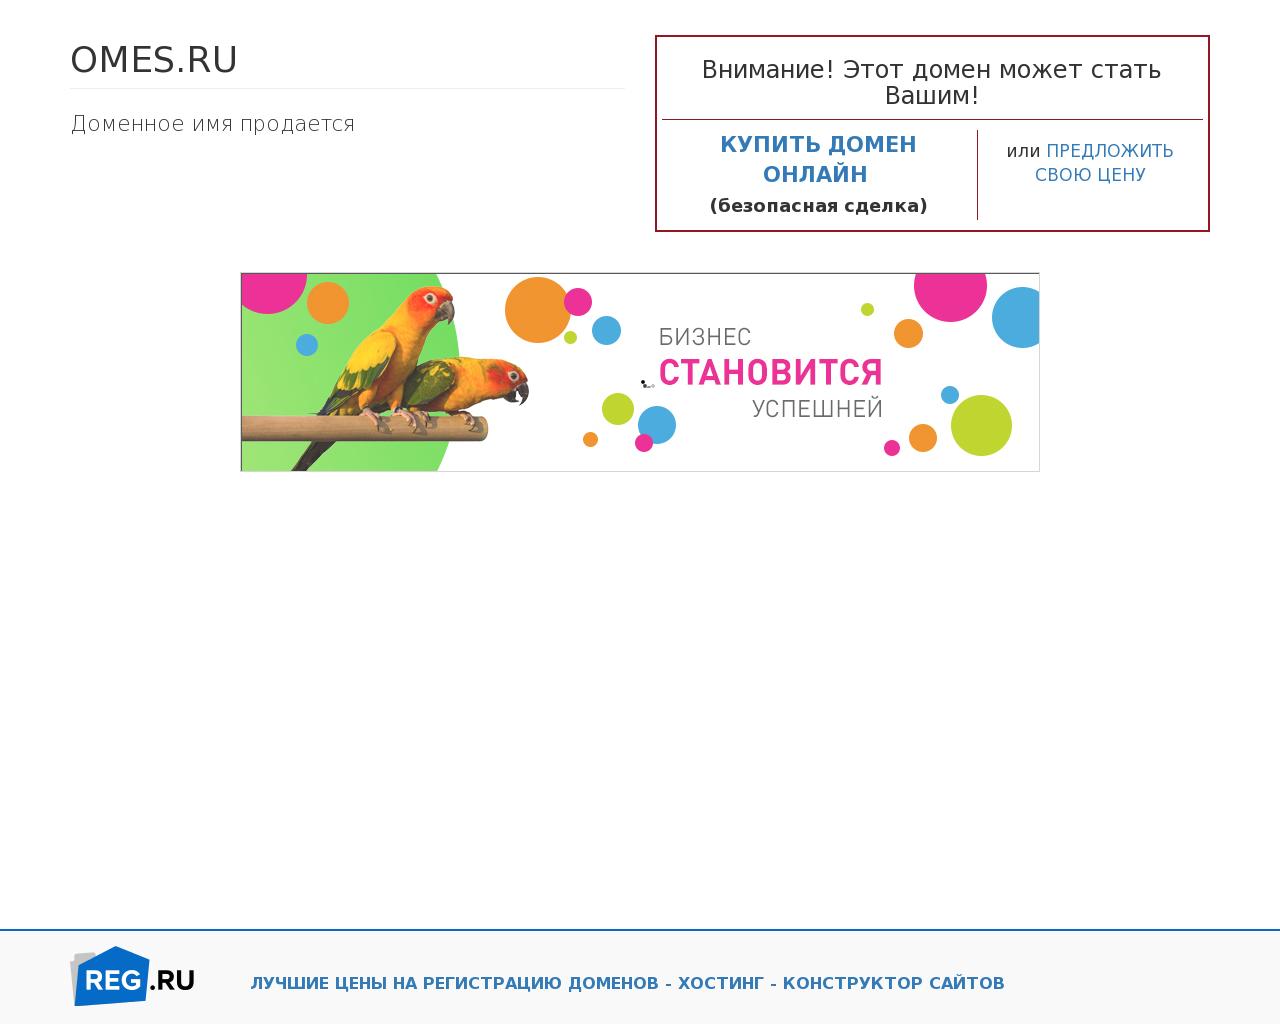 Изображение сайта omes.ru в разрешении 1280x1024